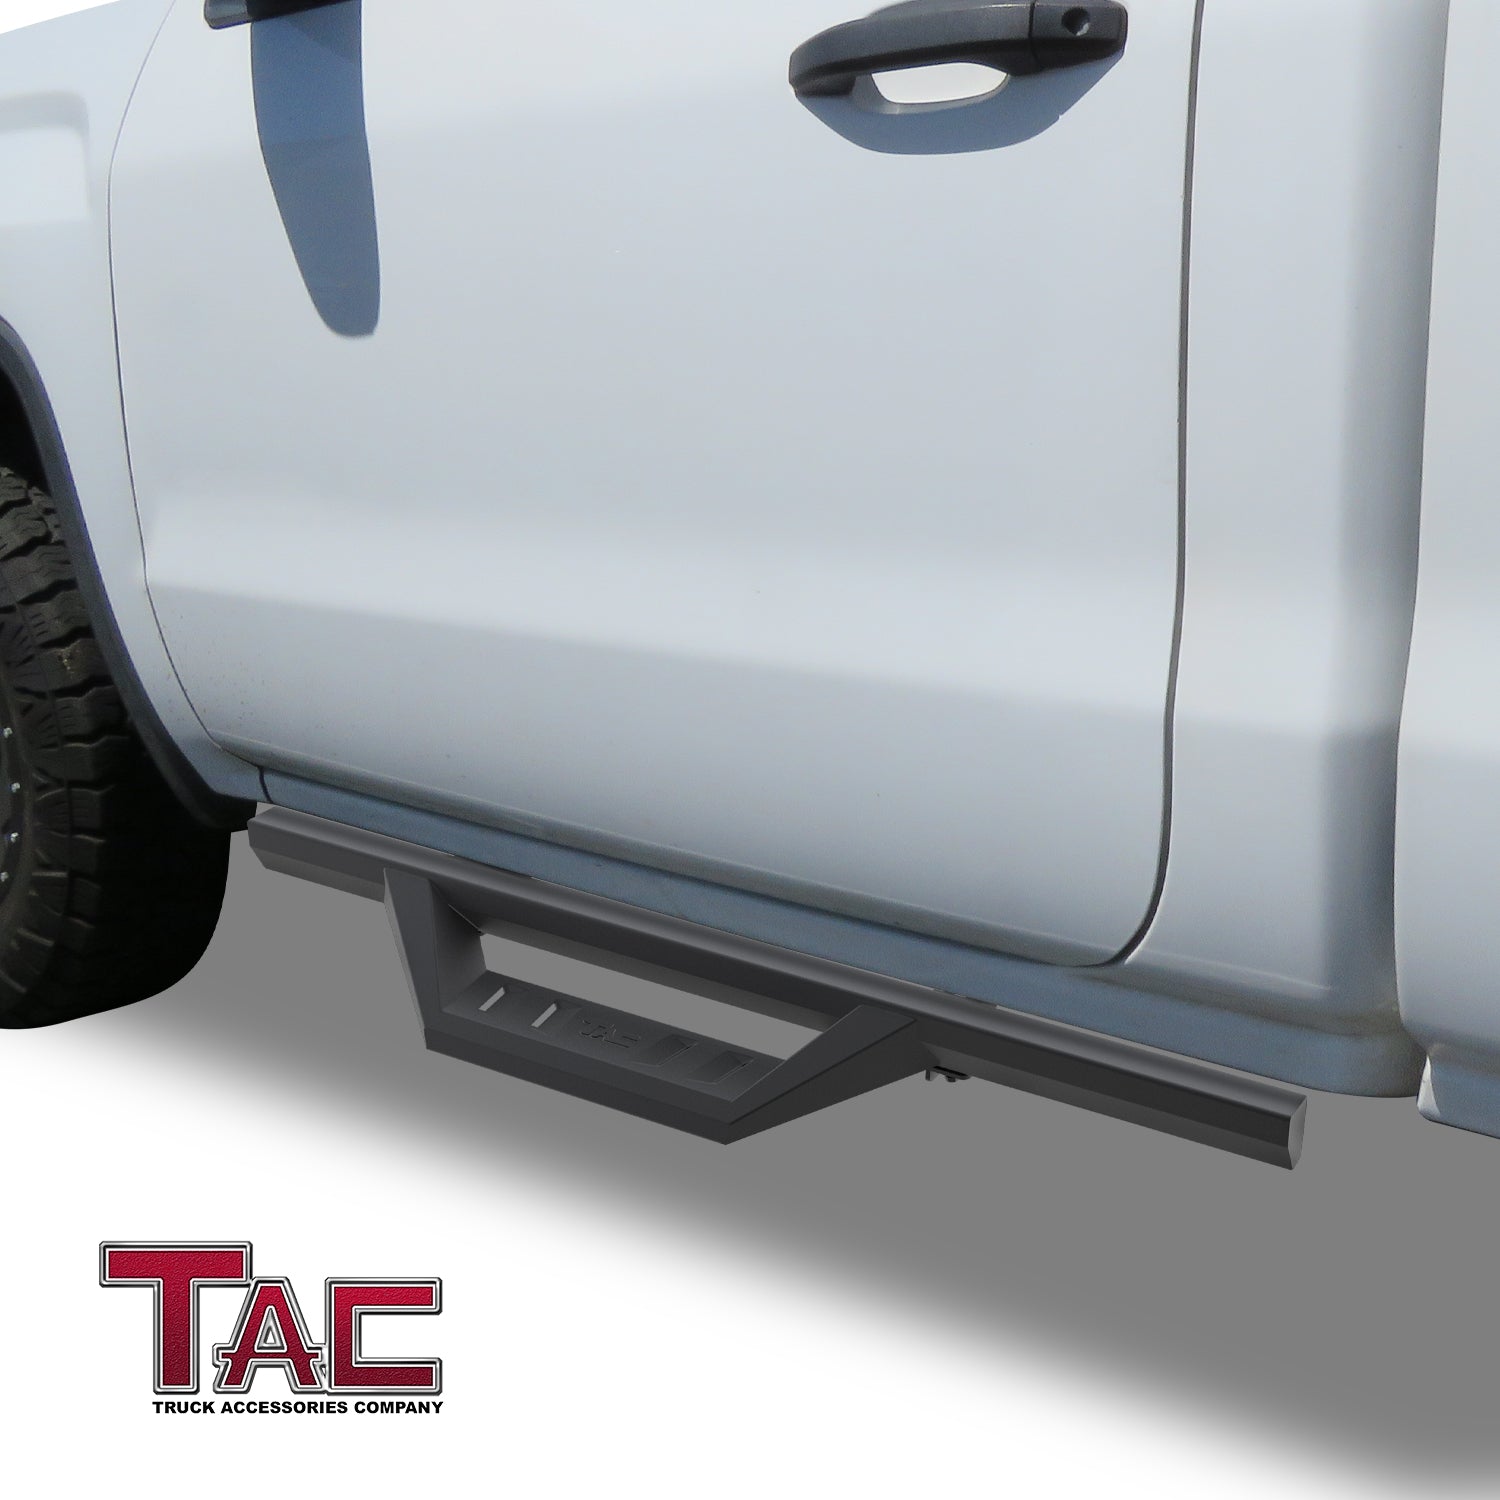 TAC Sidewinder Running Boards Fit 2007-2018 Chevy Silverado/GMC Sierra 1500 | 2007-2019 2500/3500 Regular Cab Pickup Truck 4” Drop Side Steps Nerf Bars Rock Slider Fine Texture - 0